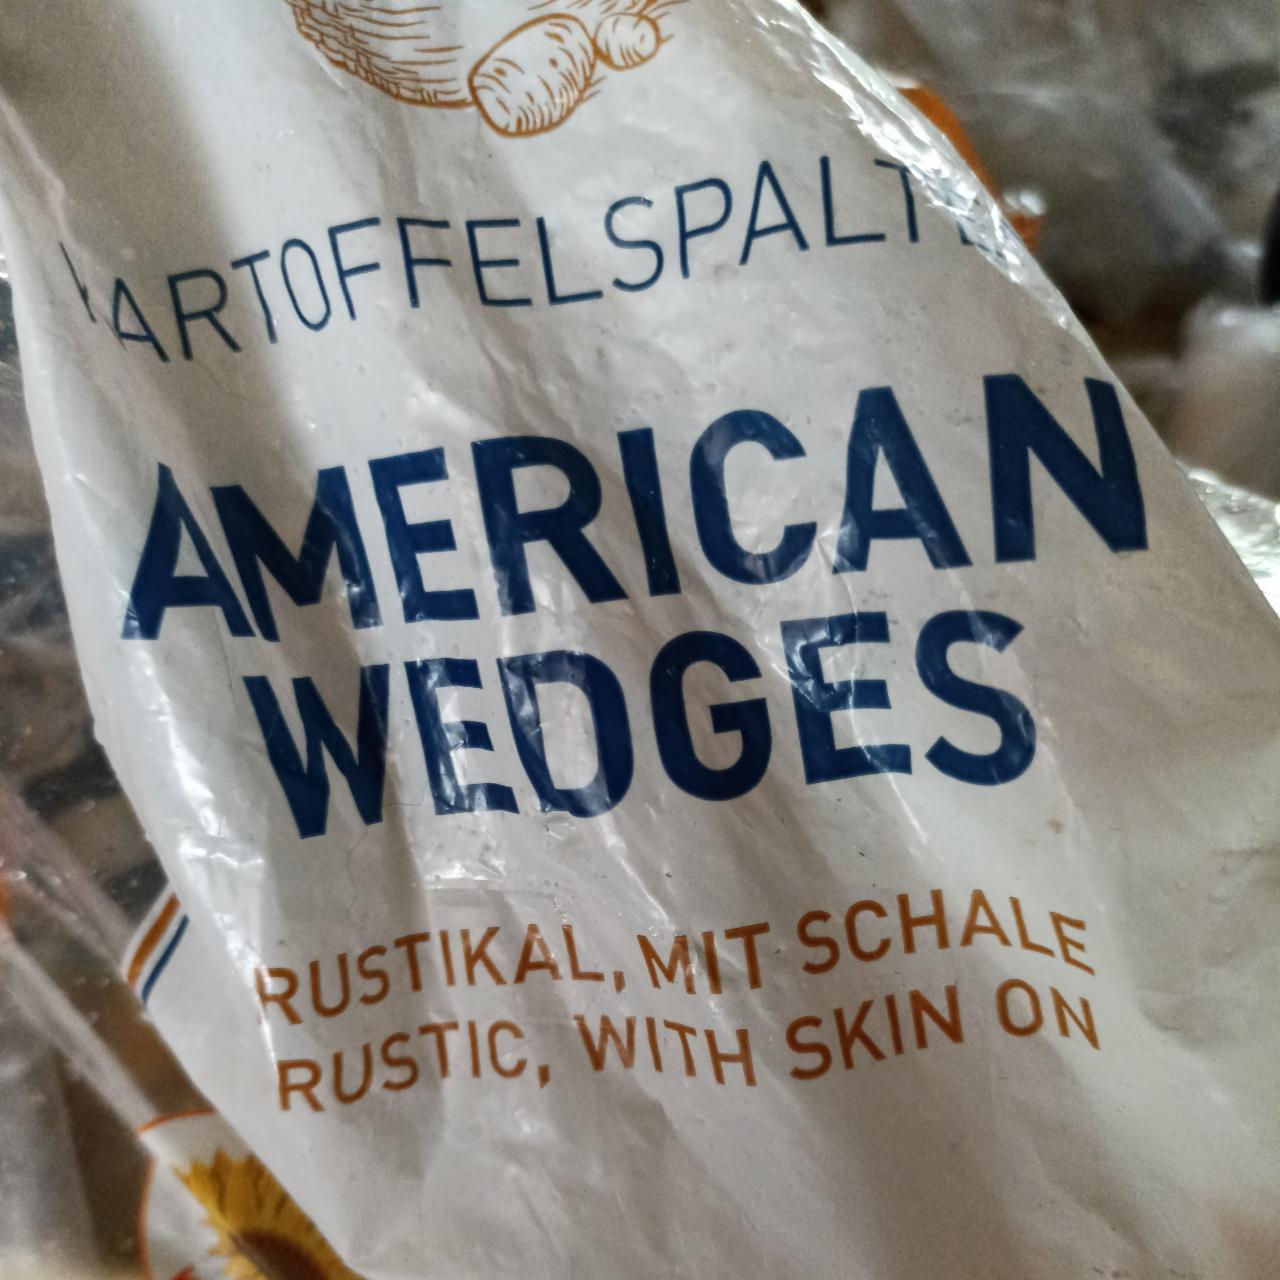 Fotografie - American wedges kartoffelspalten